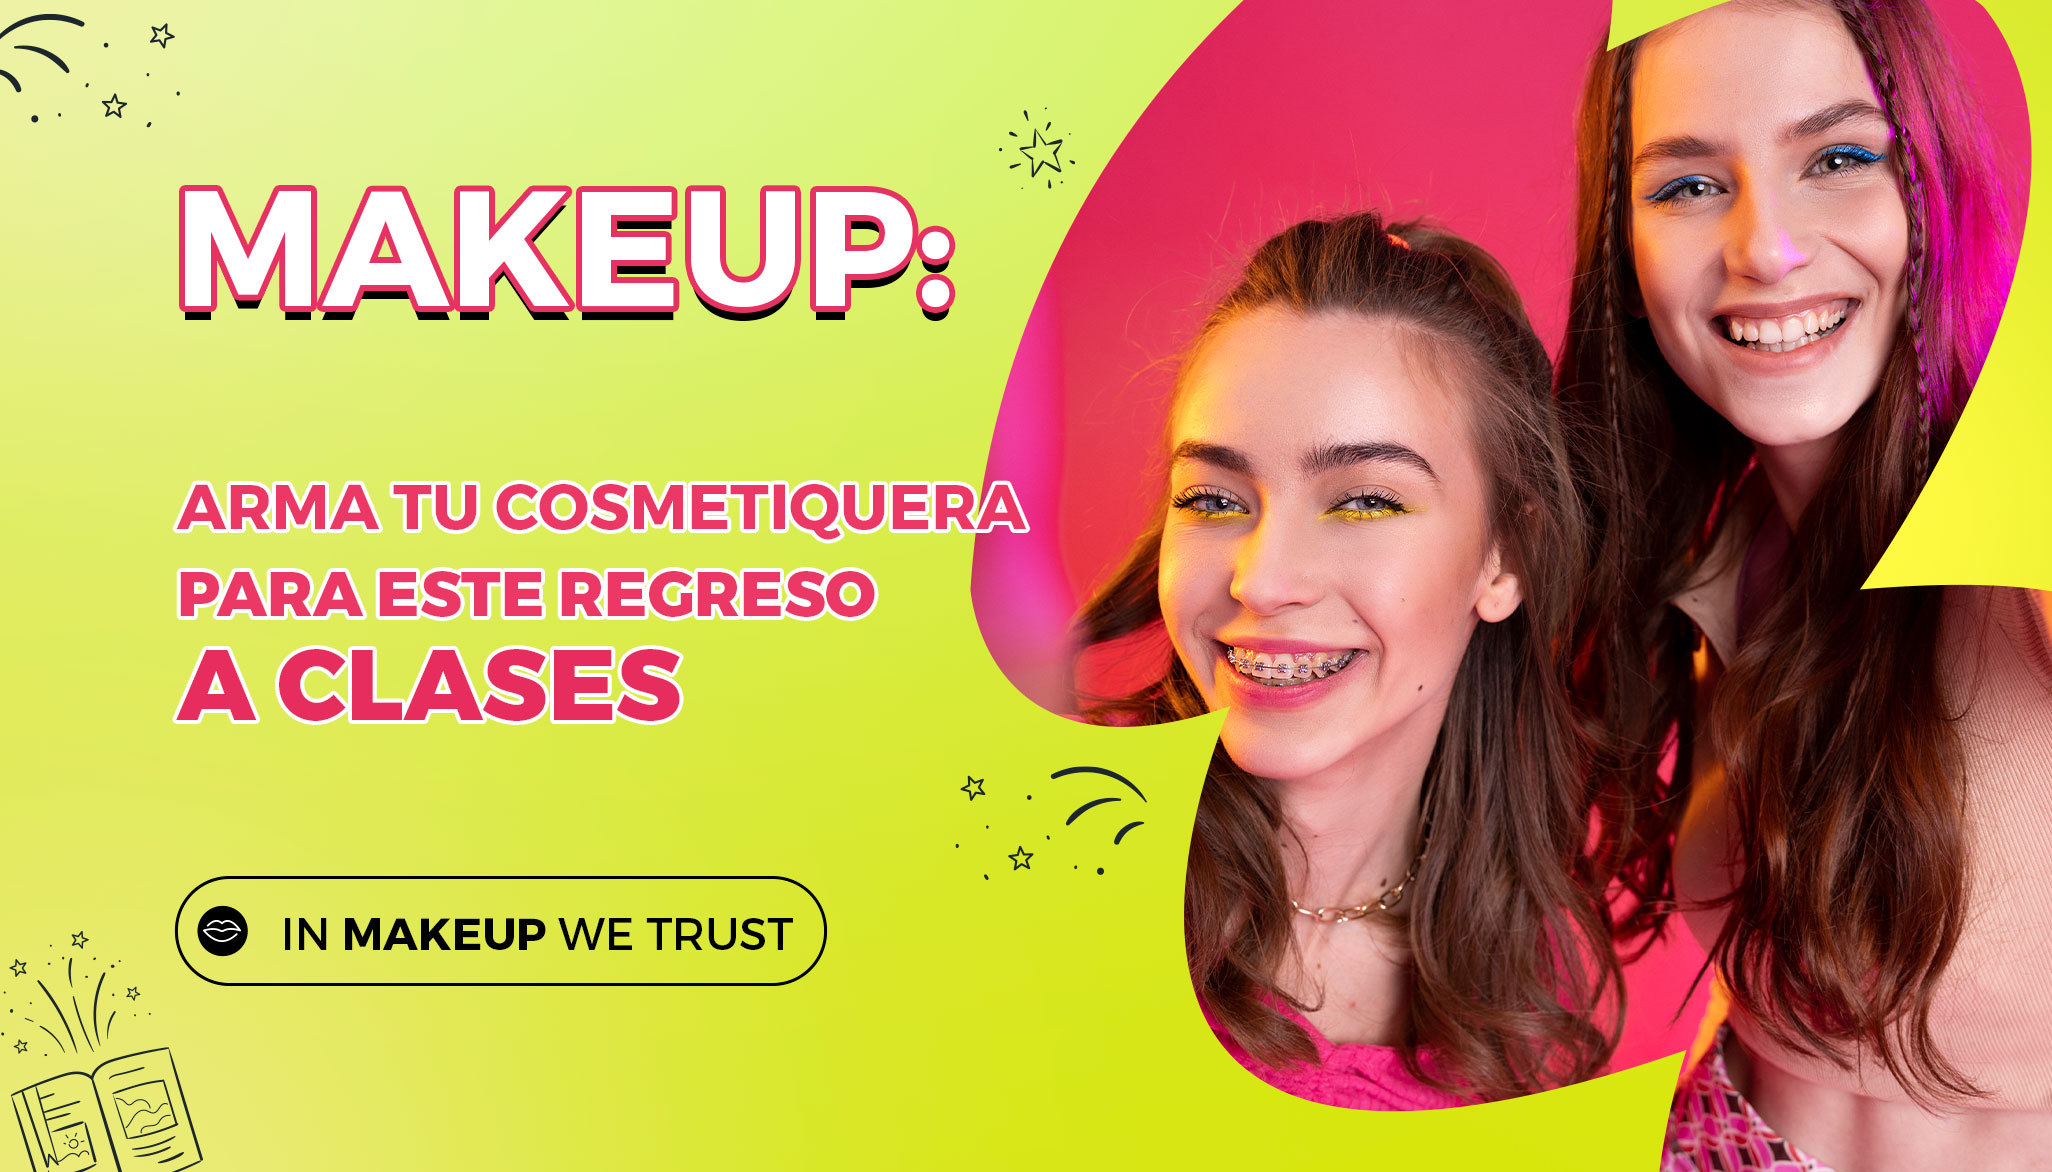 Makeup: Arma tu cosmetiquera para este regreso a clases